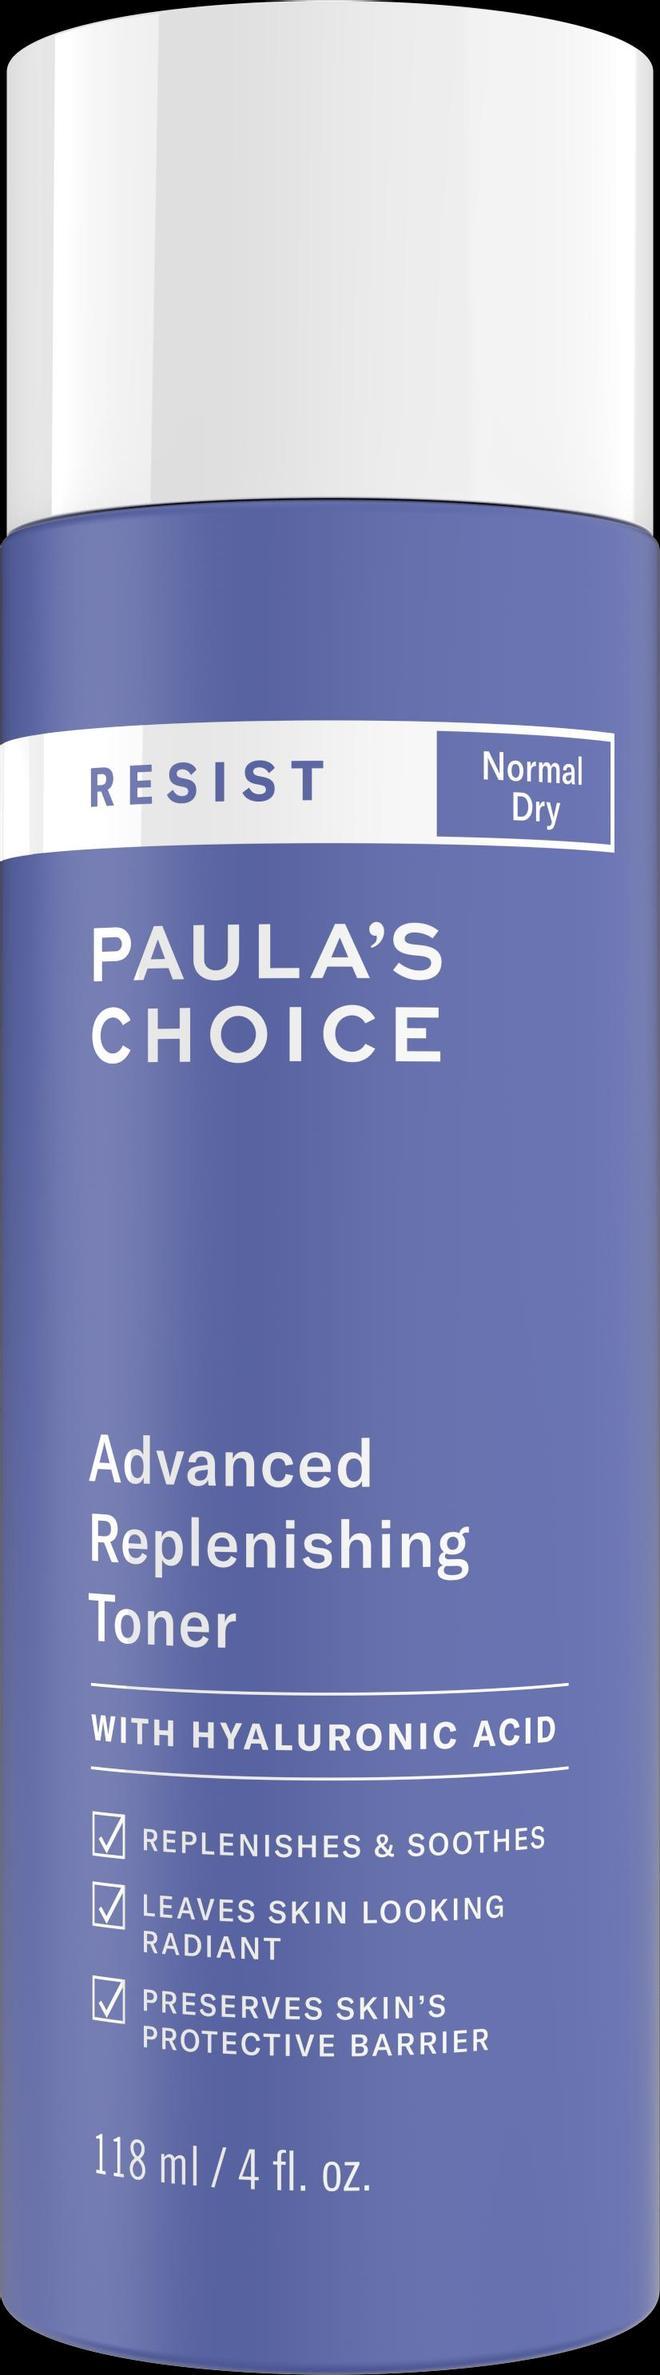 Resist Advanced Replenishing Toner de Paula’s Choice